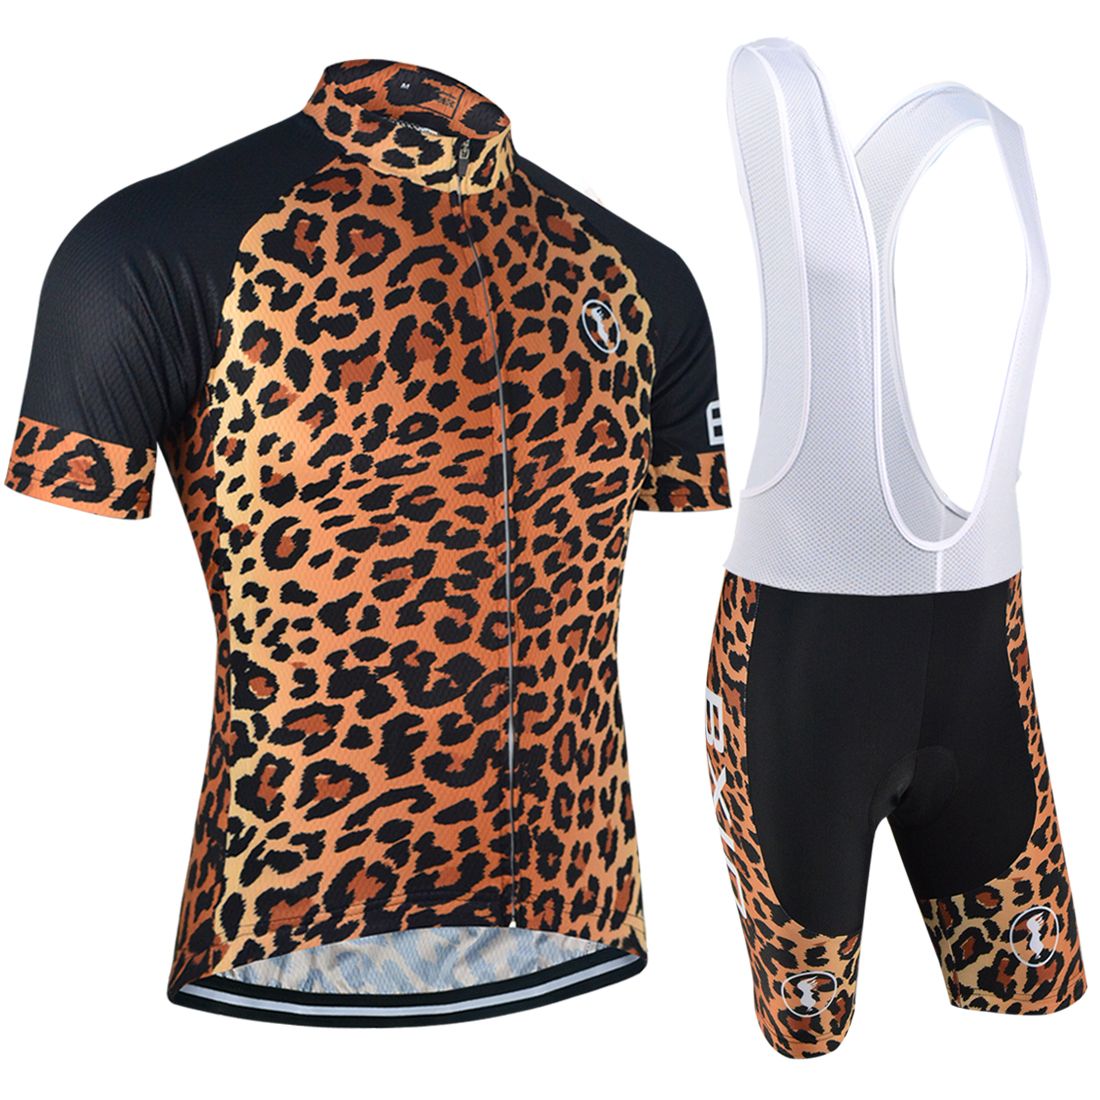 Bxio Brand Short Sleeve Road Bike Jerseys Cool Leopard Print Cycle regarding Cycling Jersey Sale